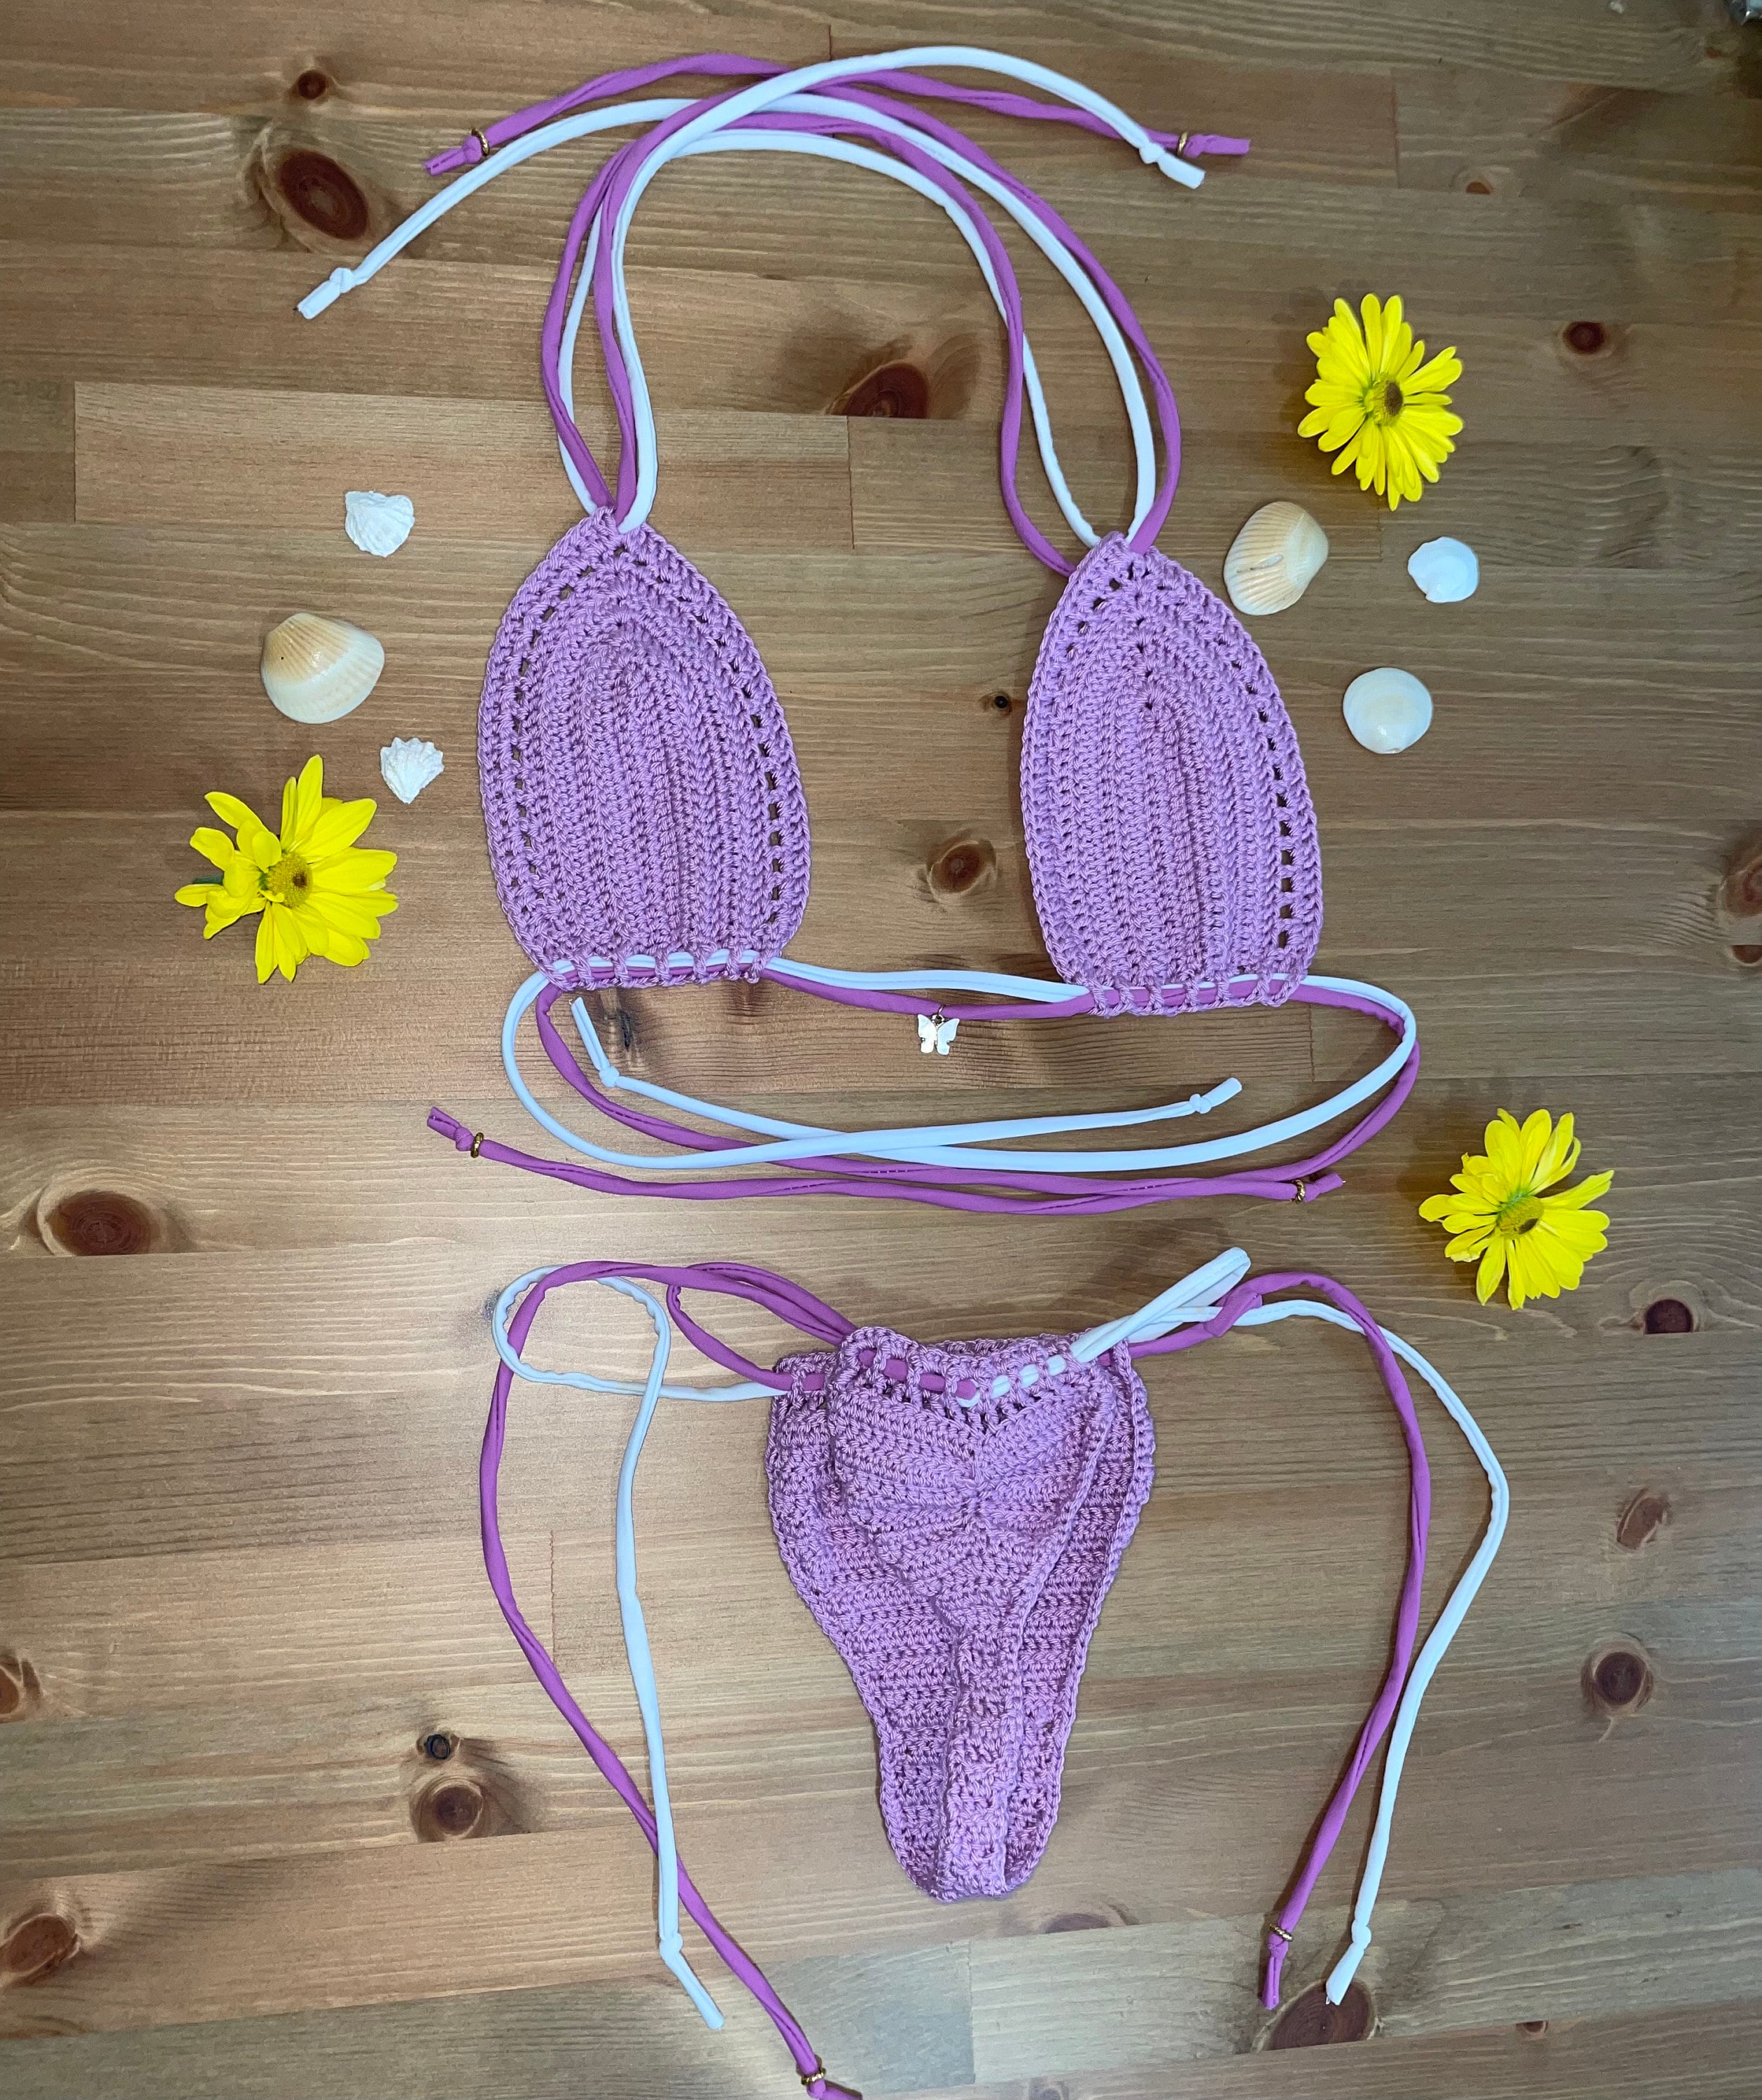 Crochet Bikini Pattern monokini mint ,bikini One Piece. PDF